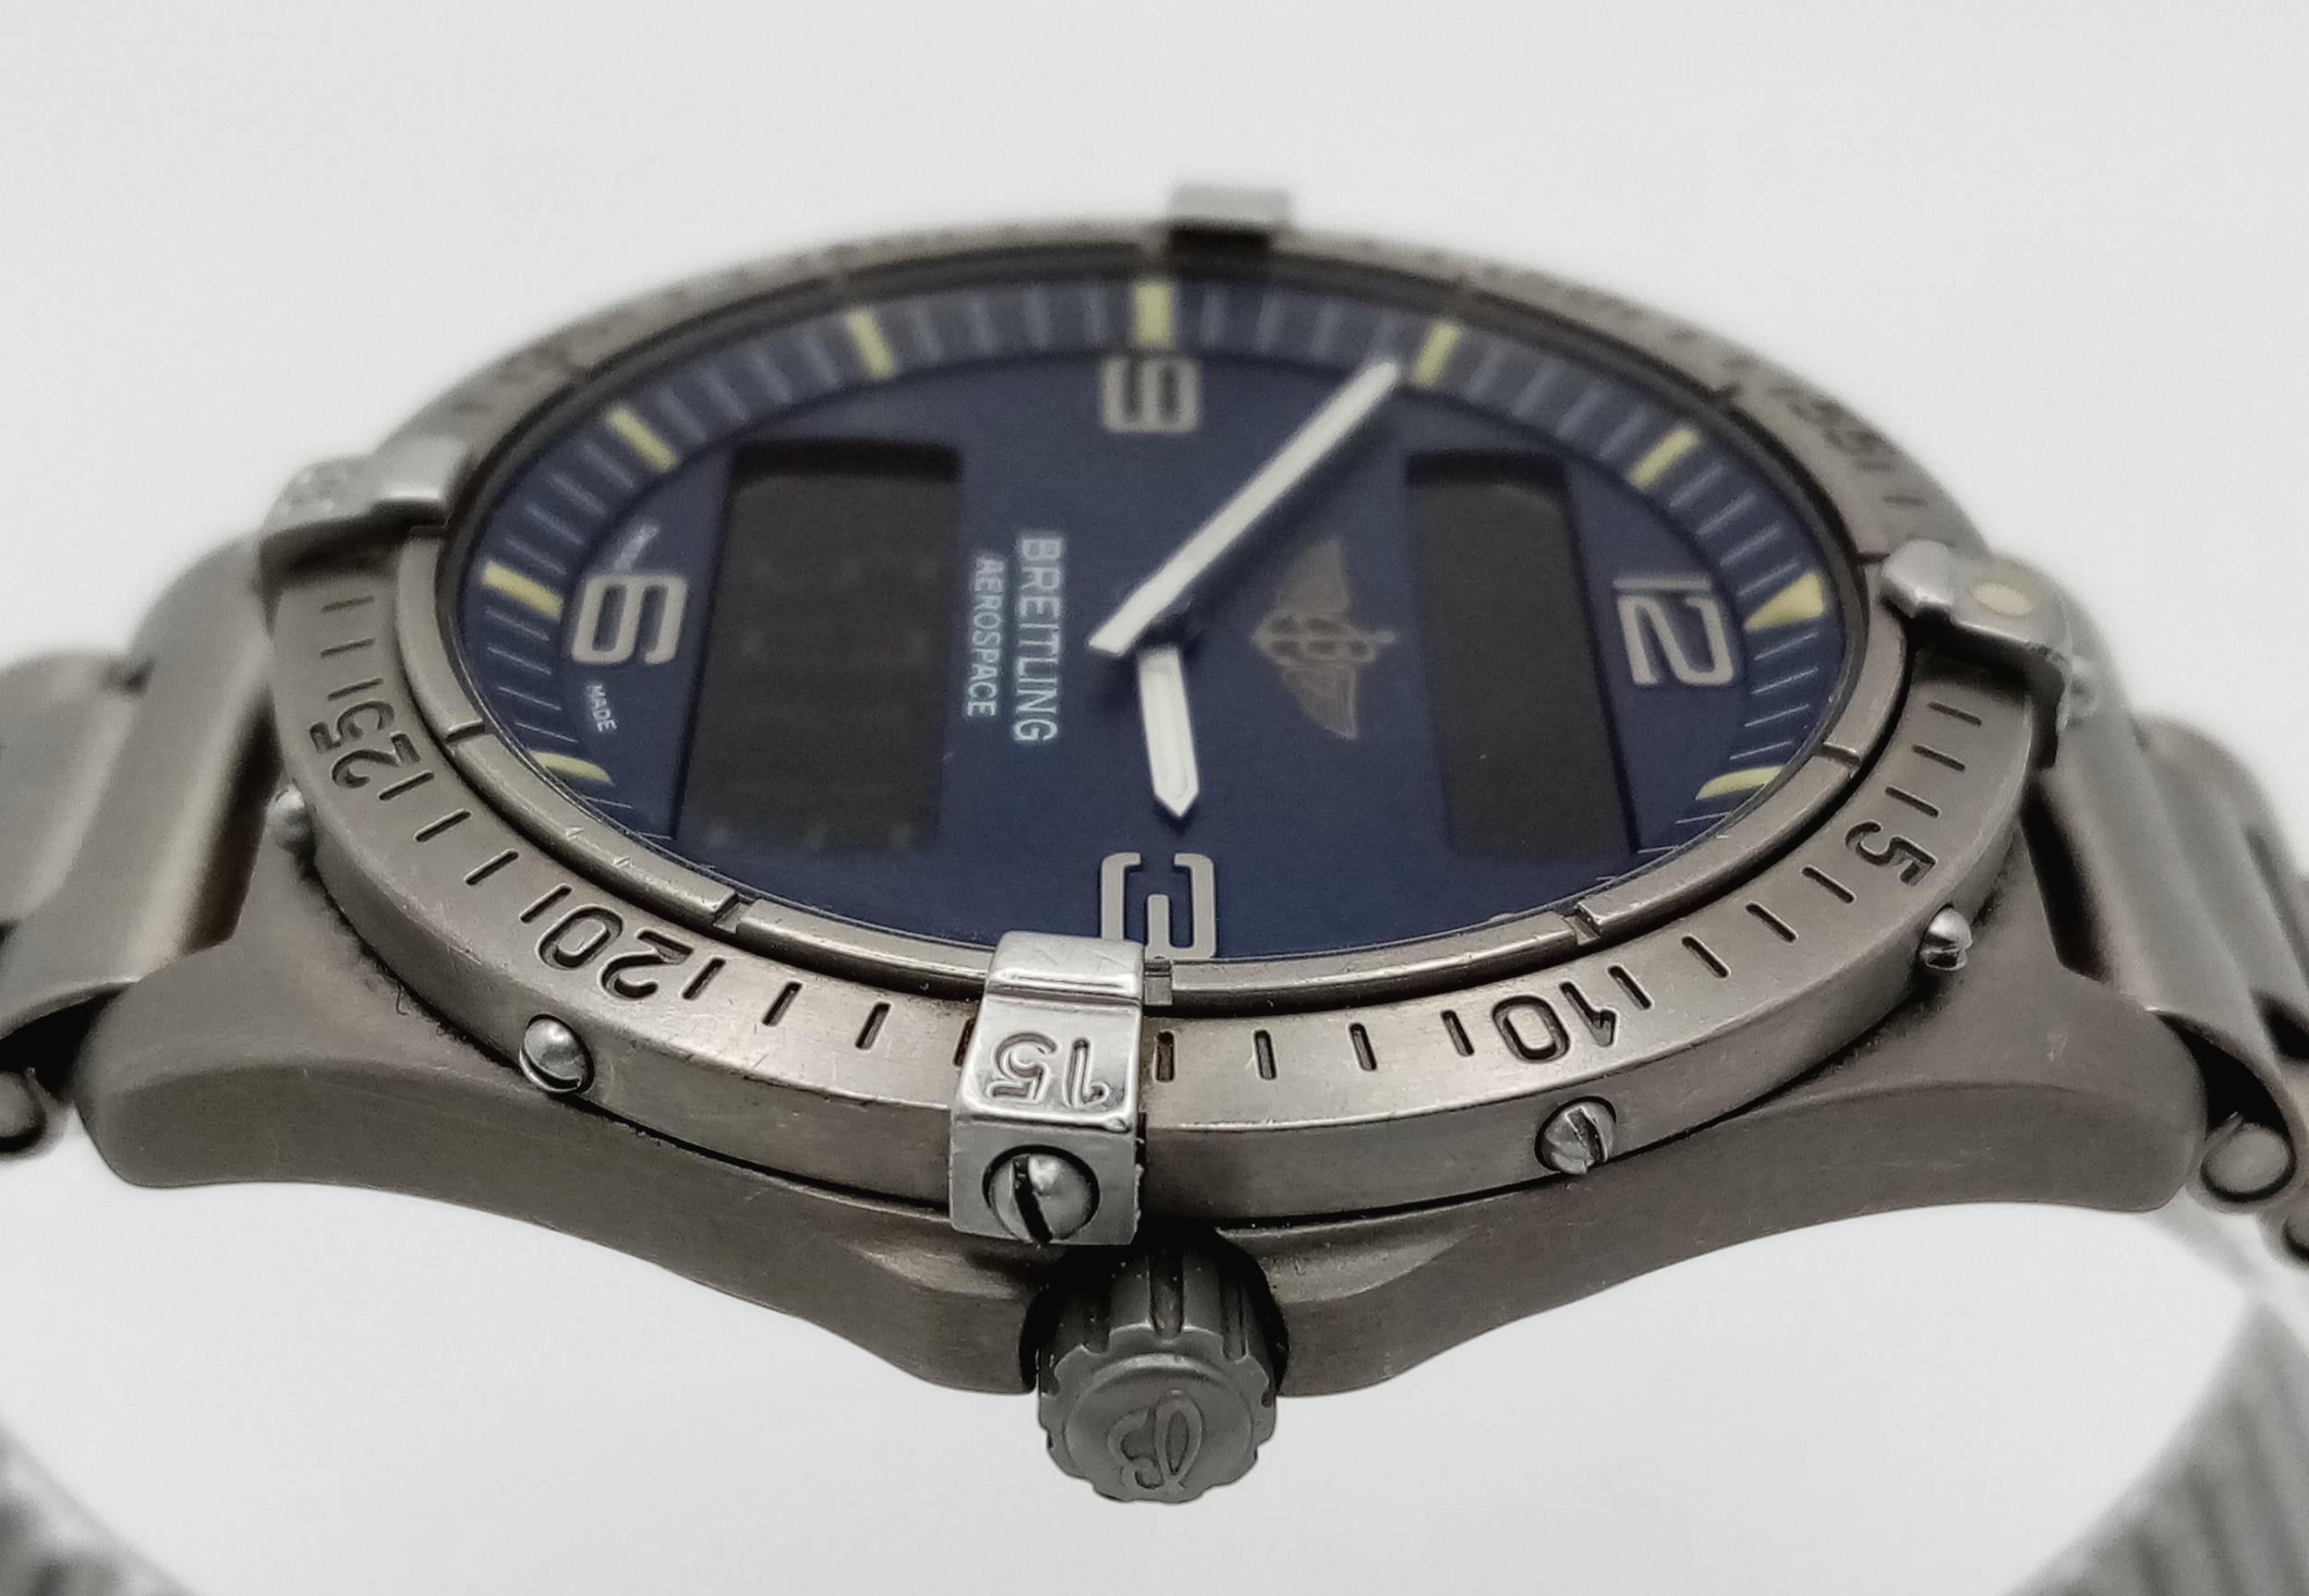 A Breitling E56062 Aerospace Quartz Pilots Watch. Titanium bracelet and case - 40mm. Blue dial - Image 5 of 9